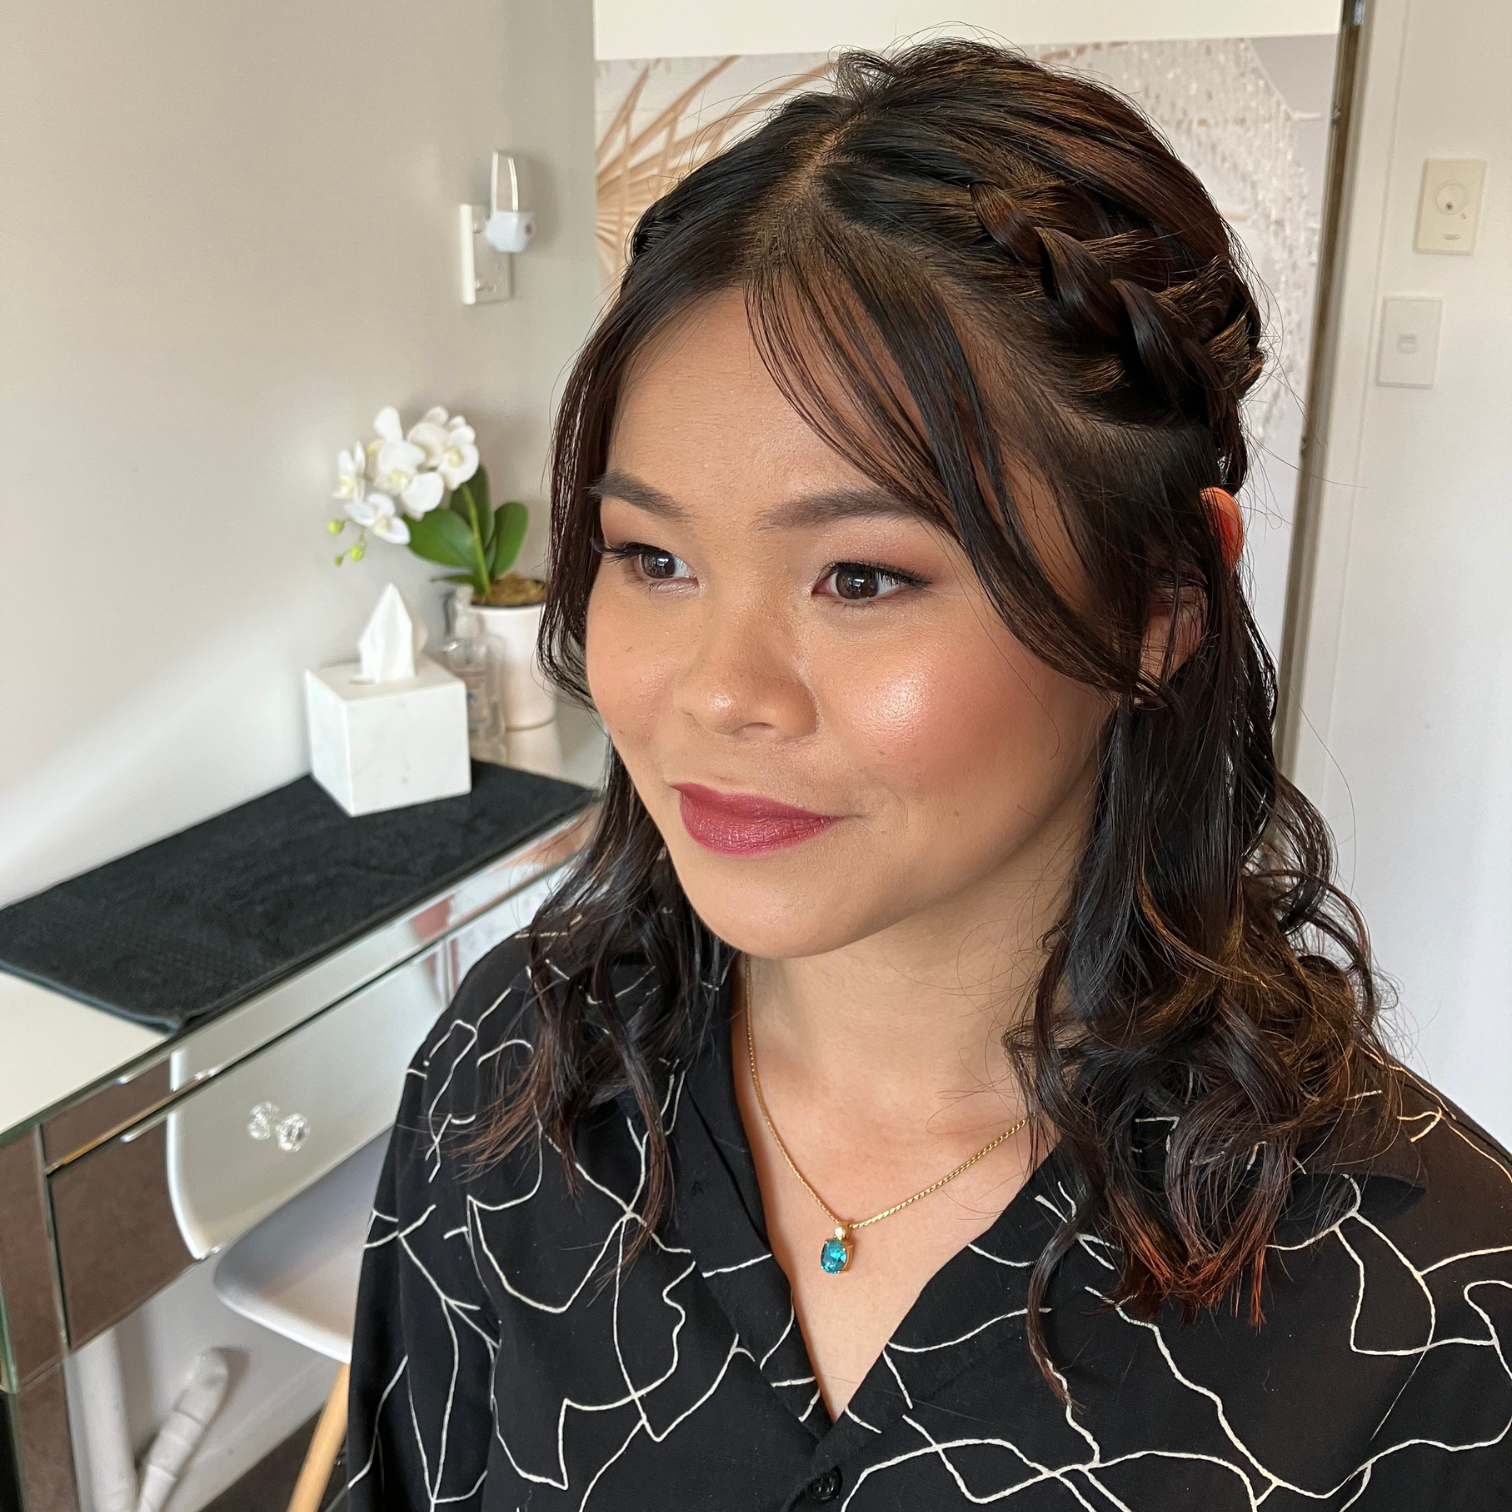 Asian Soft Glam Makeup & Half Up Half Down Hair Auckland